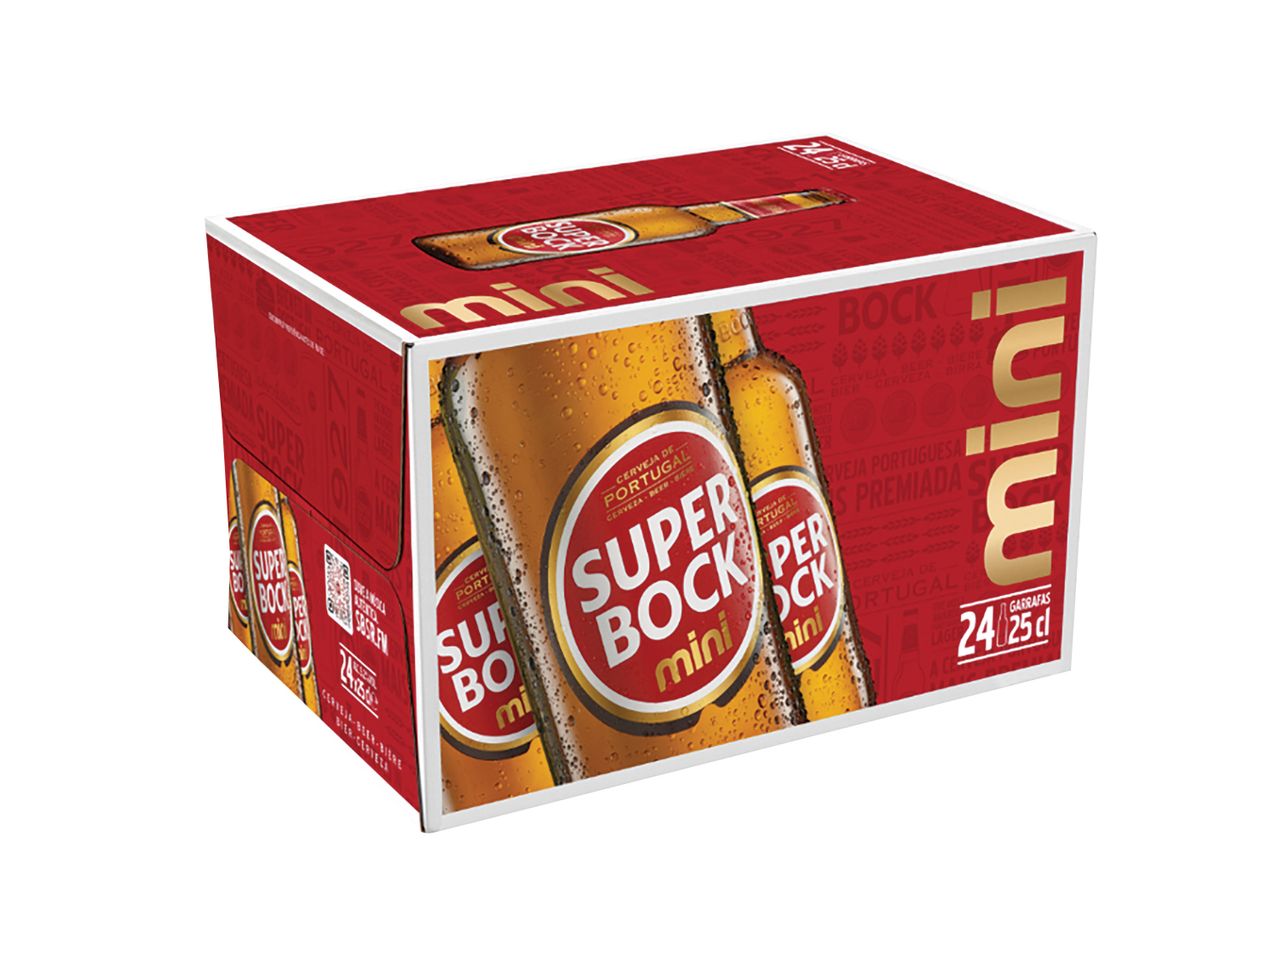 Super Bock® Cerveja Mini Pack Económico